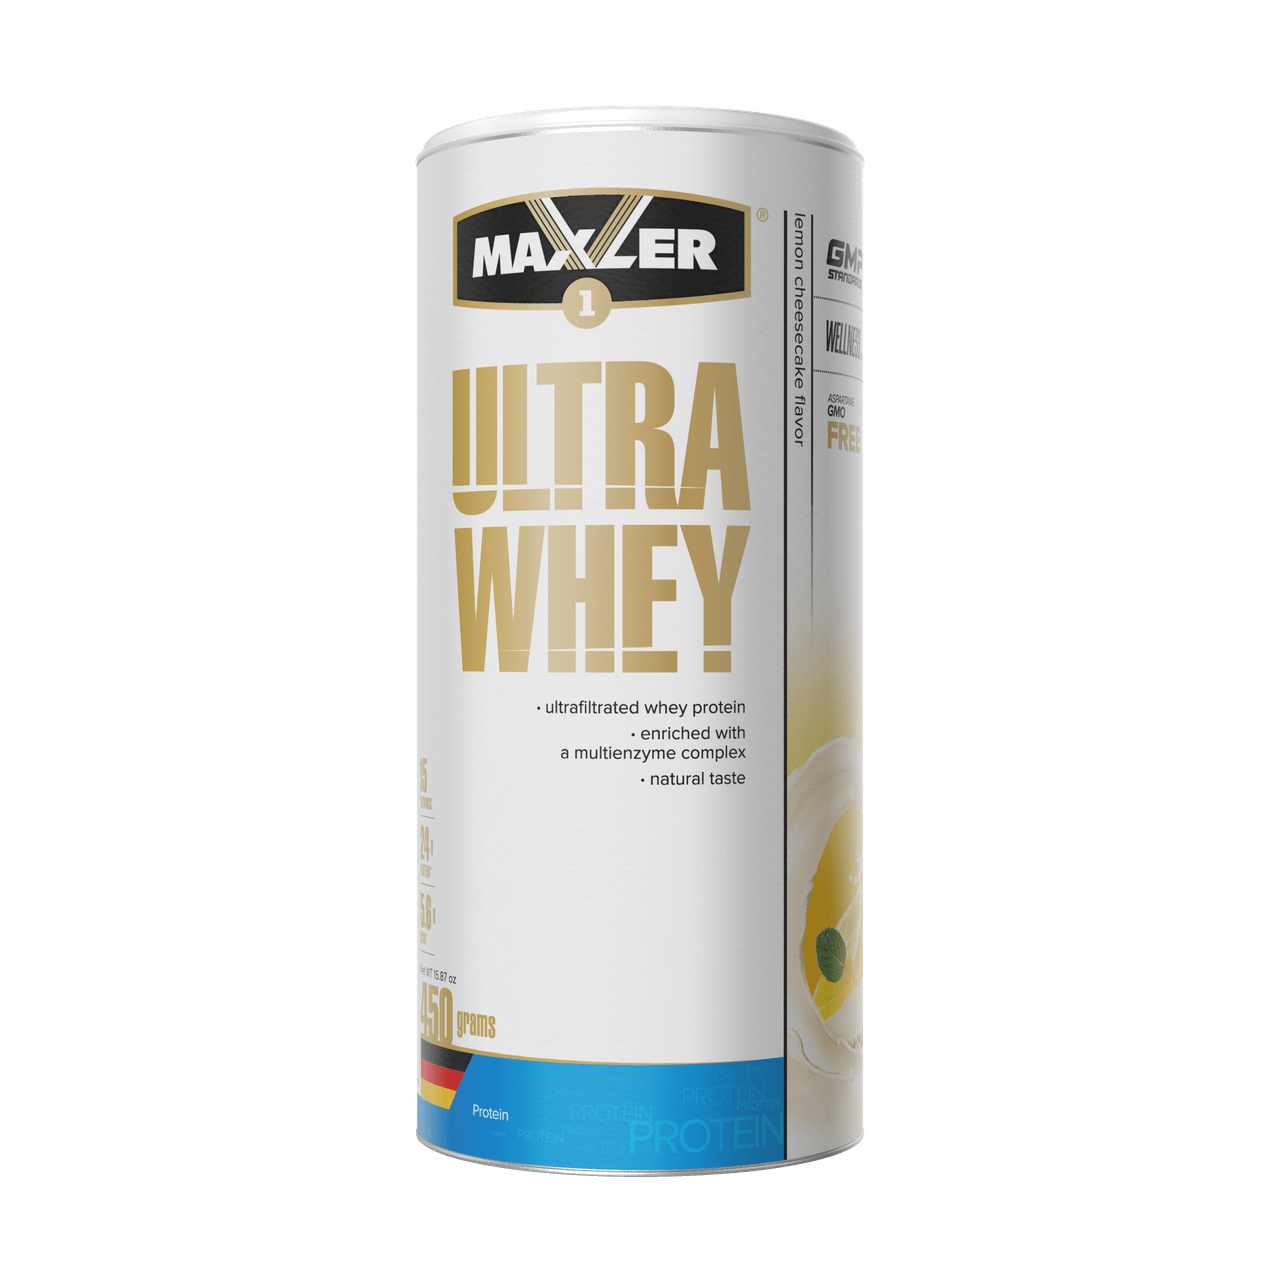 Комплексный протеин Maxler Ultra Whey (450 г) макслер ультра вей lemon cheesecake,  мл, Maxler. Комплексный протеин. 